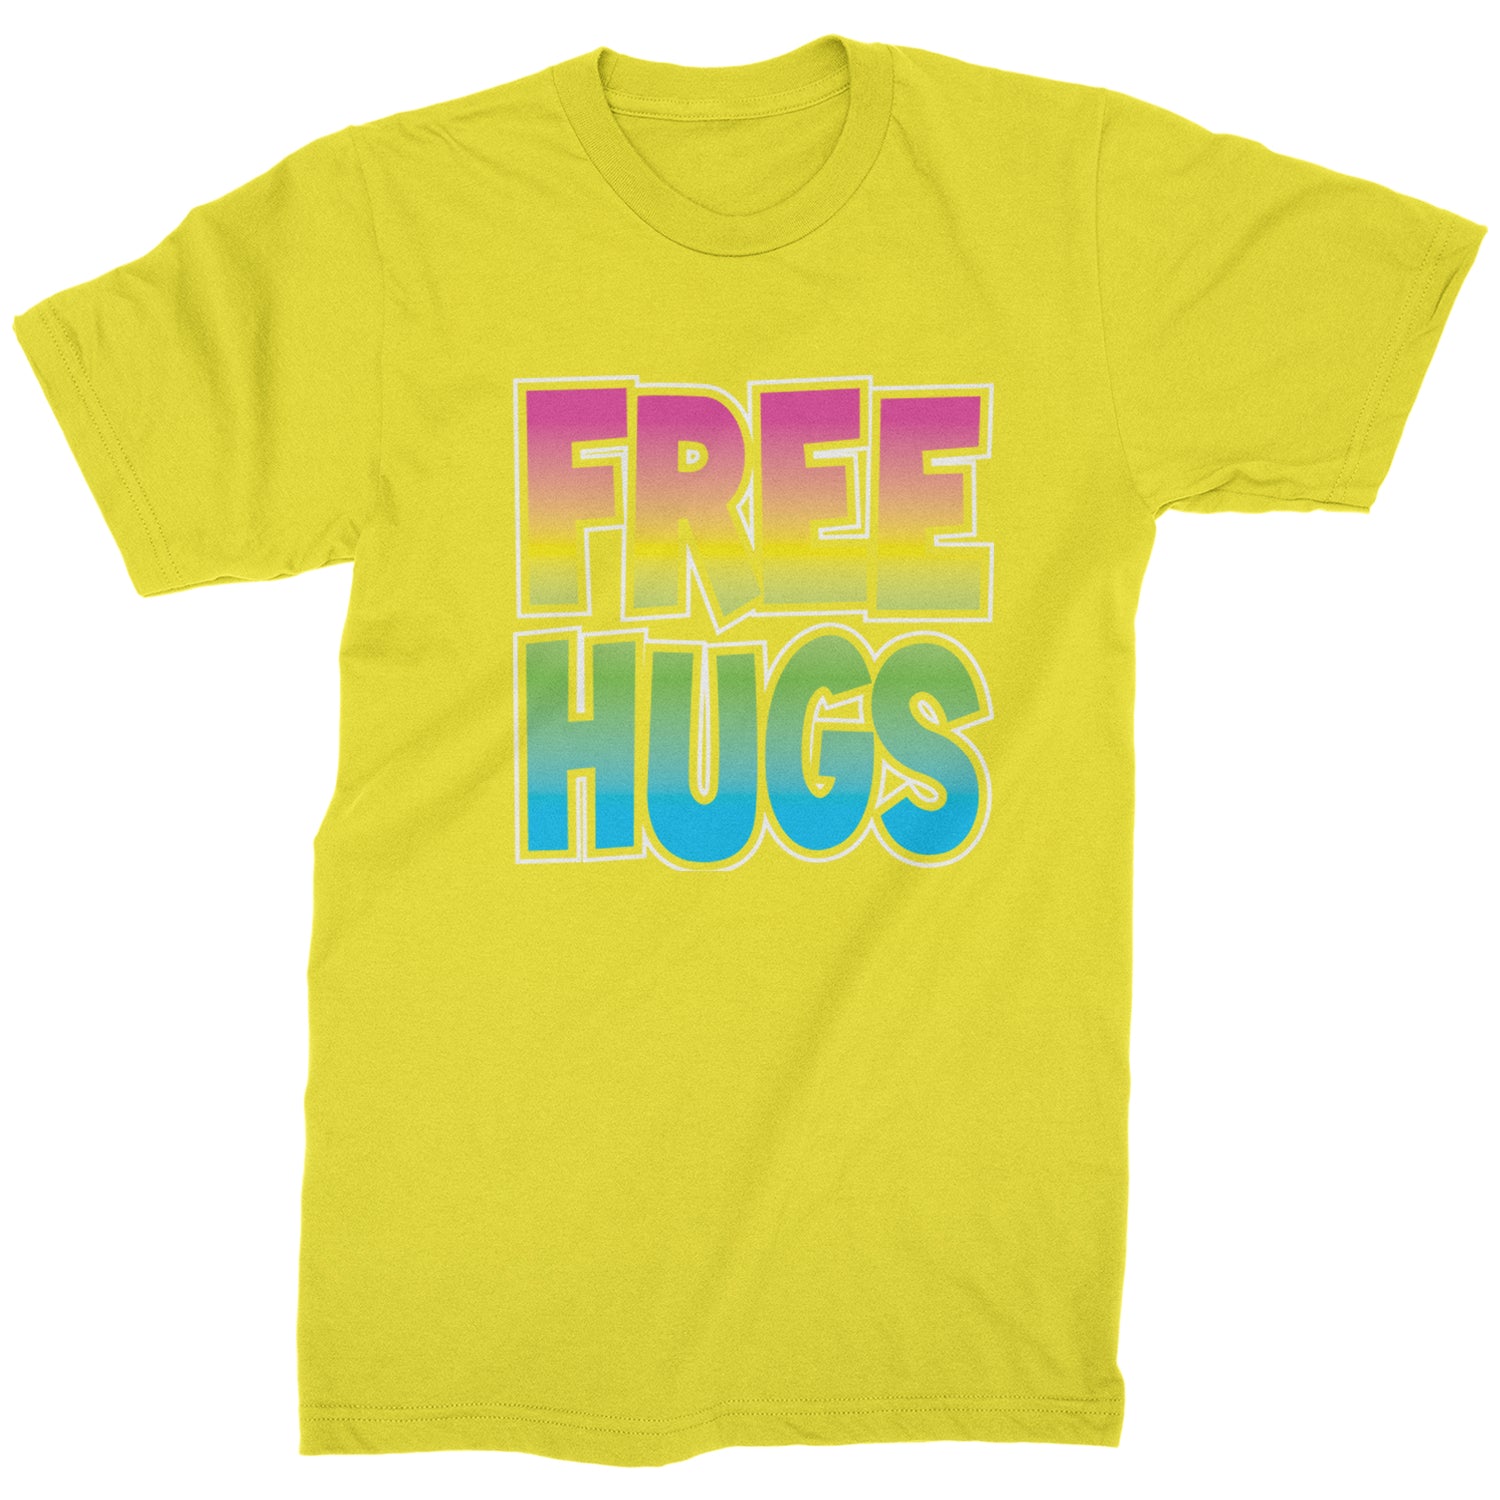 Free Hugs Mens T-shirt free, hugger, hugging, hugs by Expression Tees